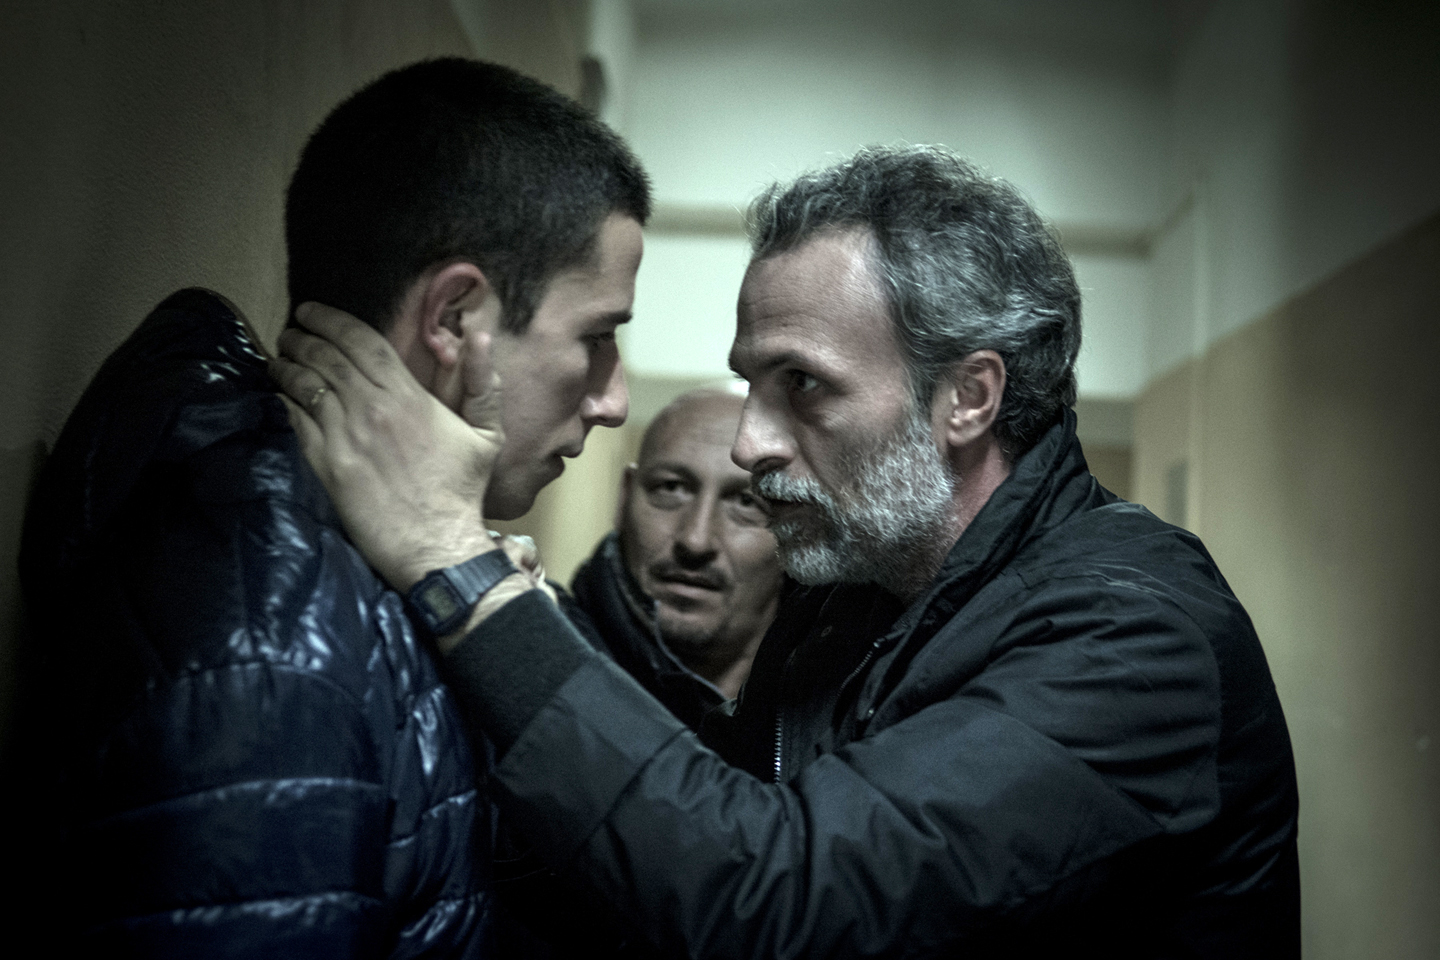 The son (Fumo, left) and father (Ferracane, right) fall into inevitable conflict. Francesca Casciarri/Vitagraph Films